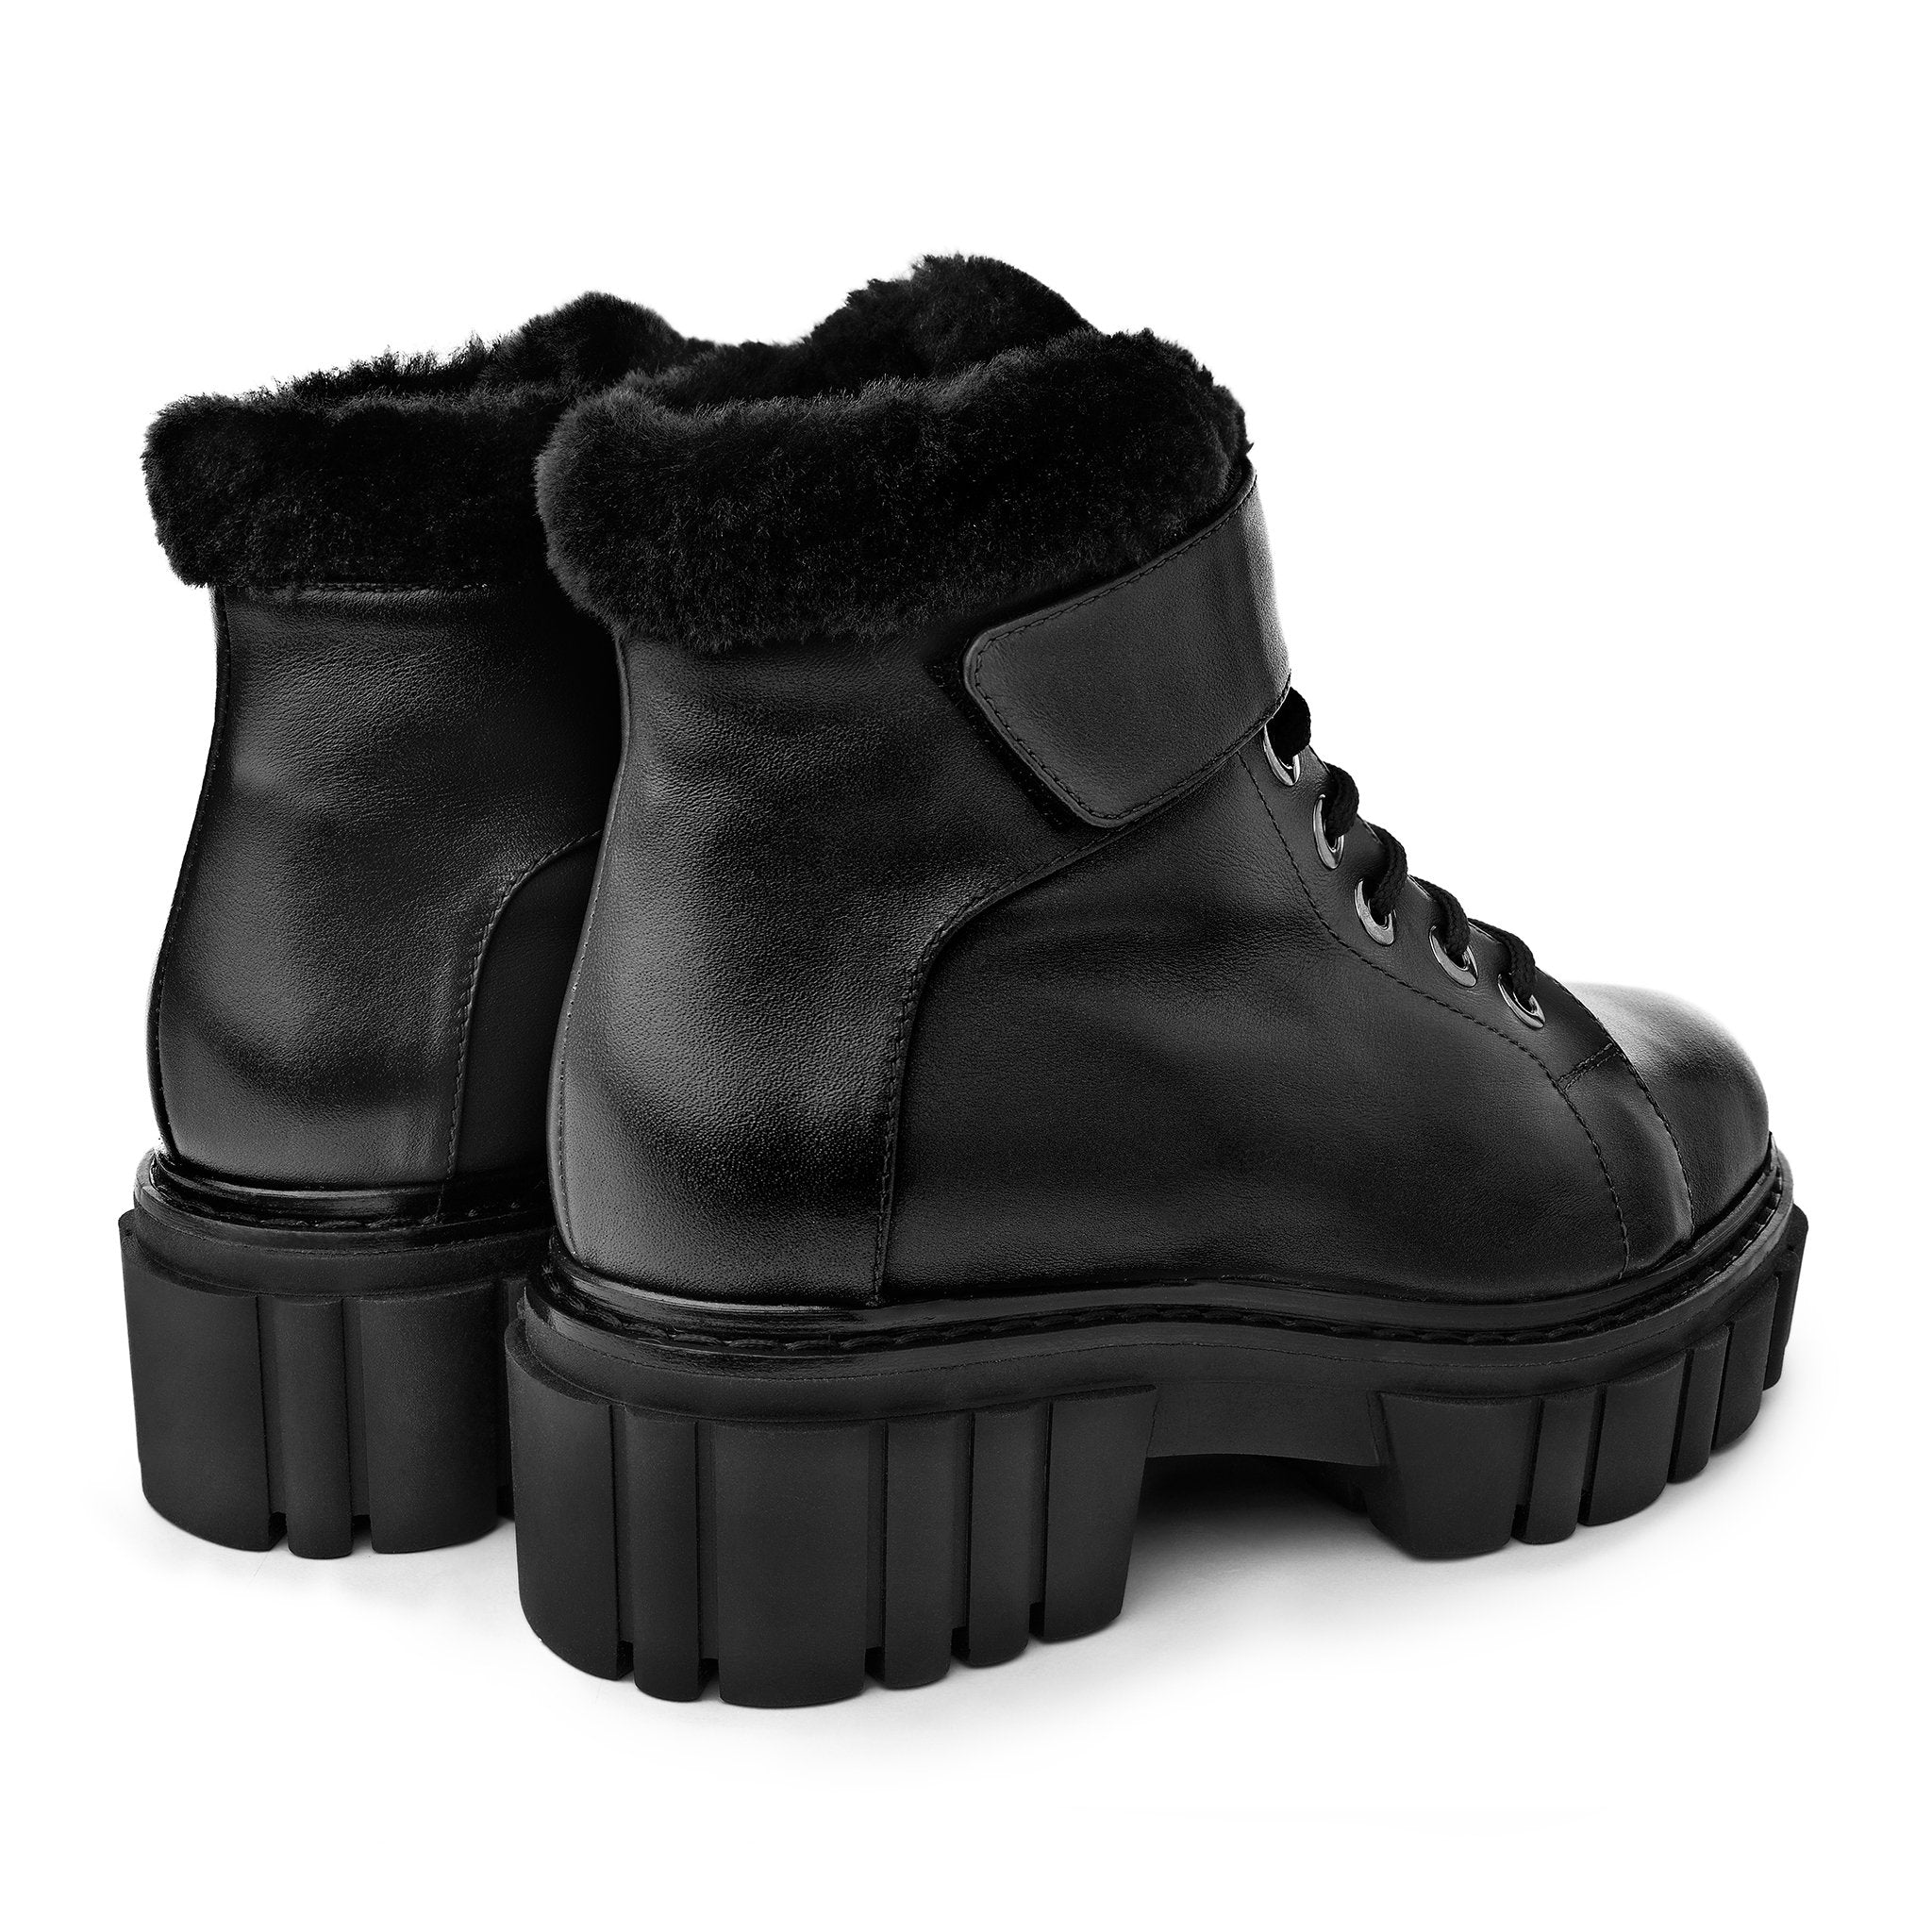 Takara Black Winter Ankle Boots 2030-01 - 5